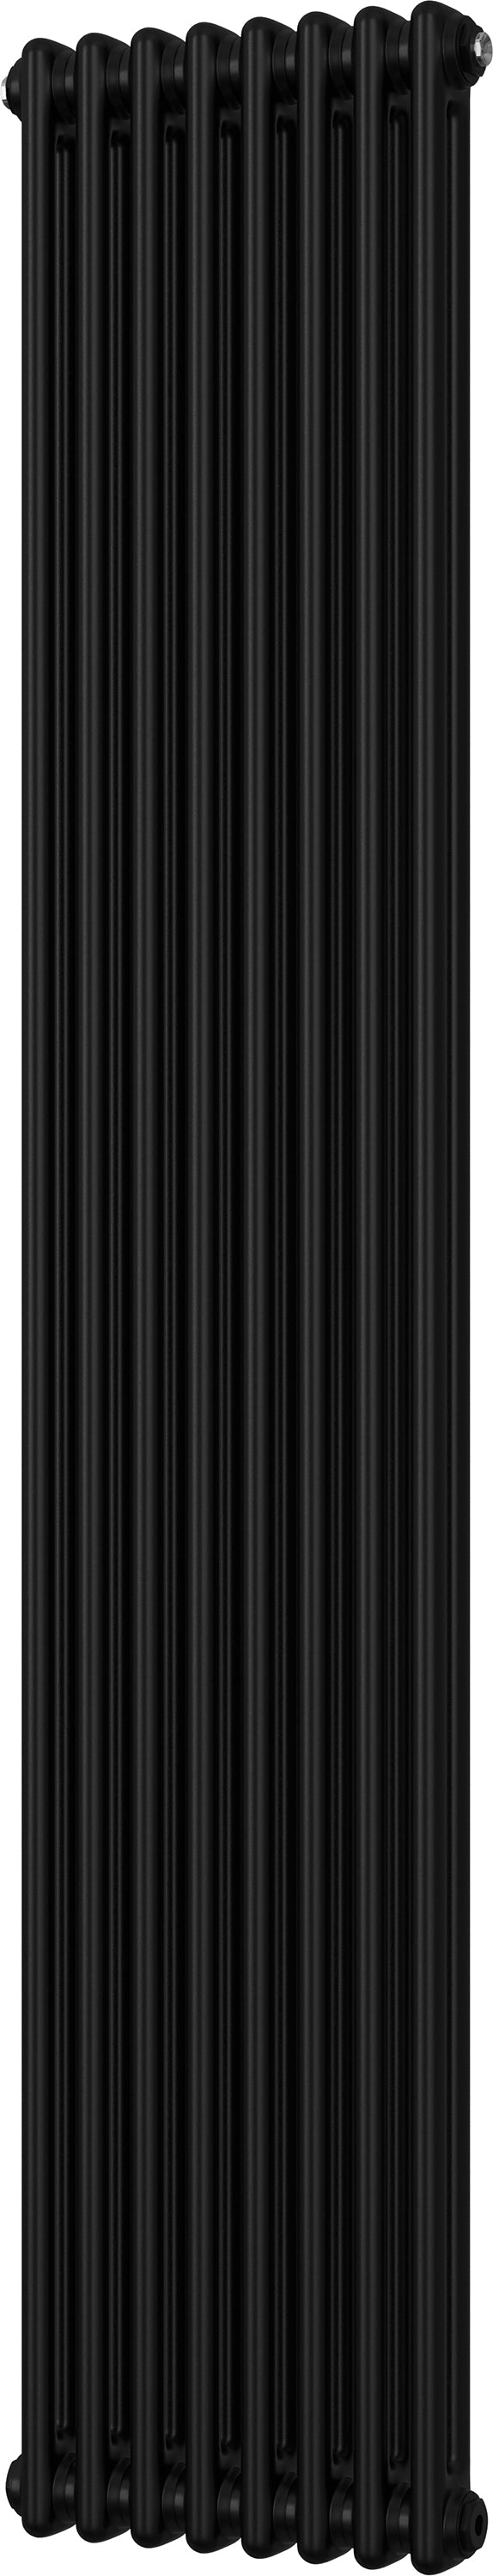 Alpha - Black Vertical Column Radiator H1800mm x W372mm 2 Column